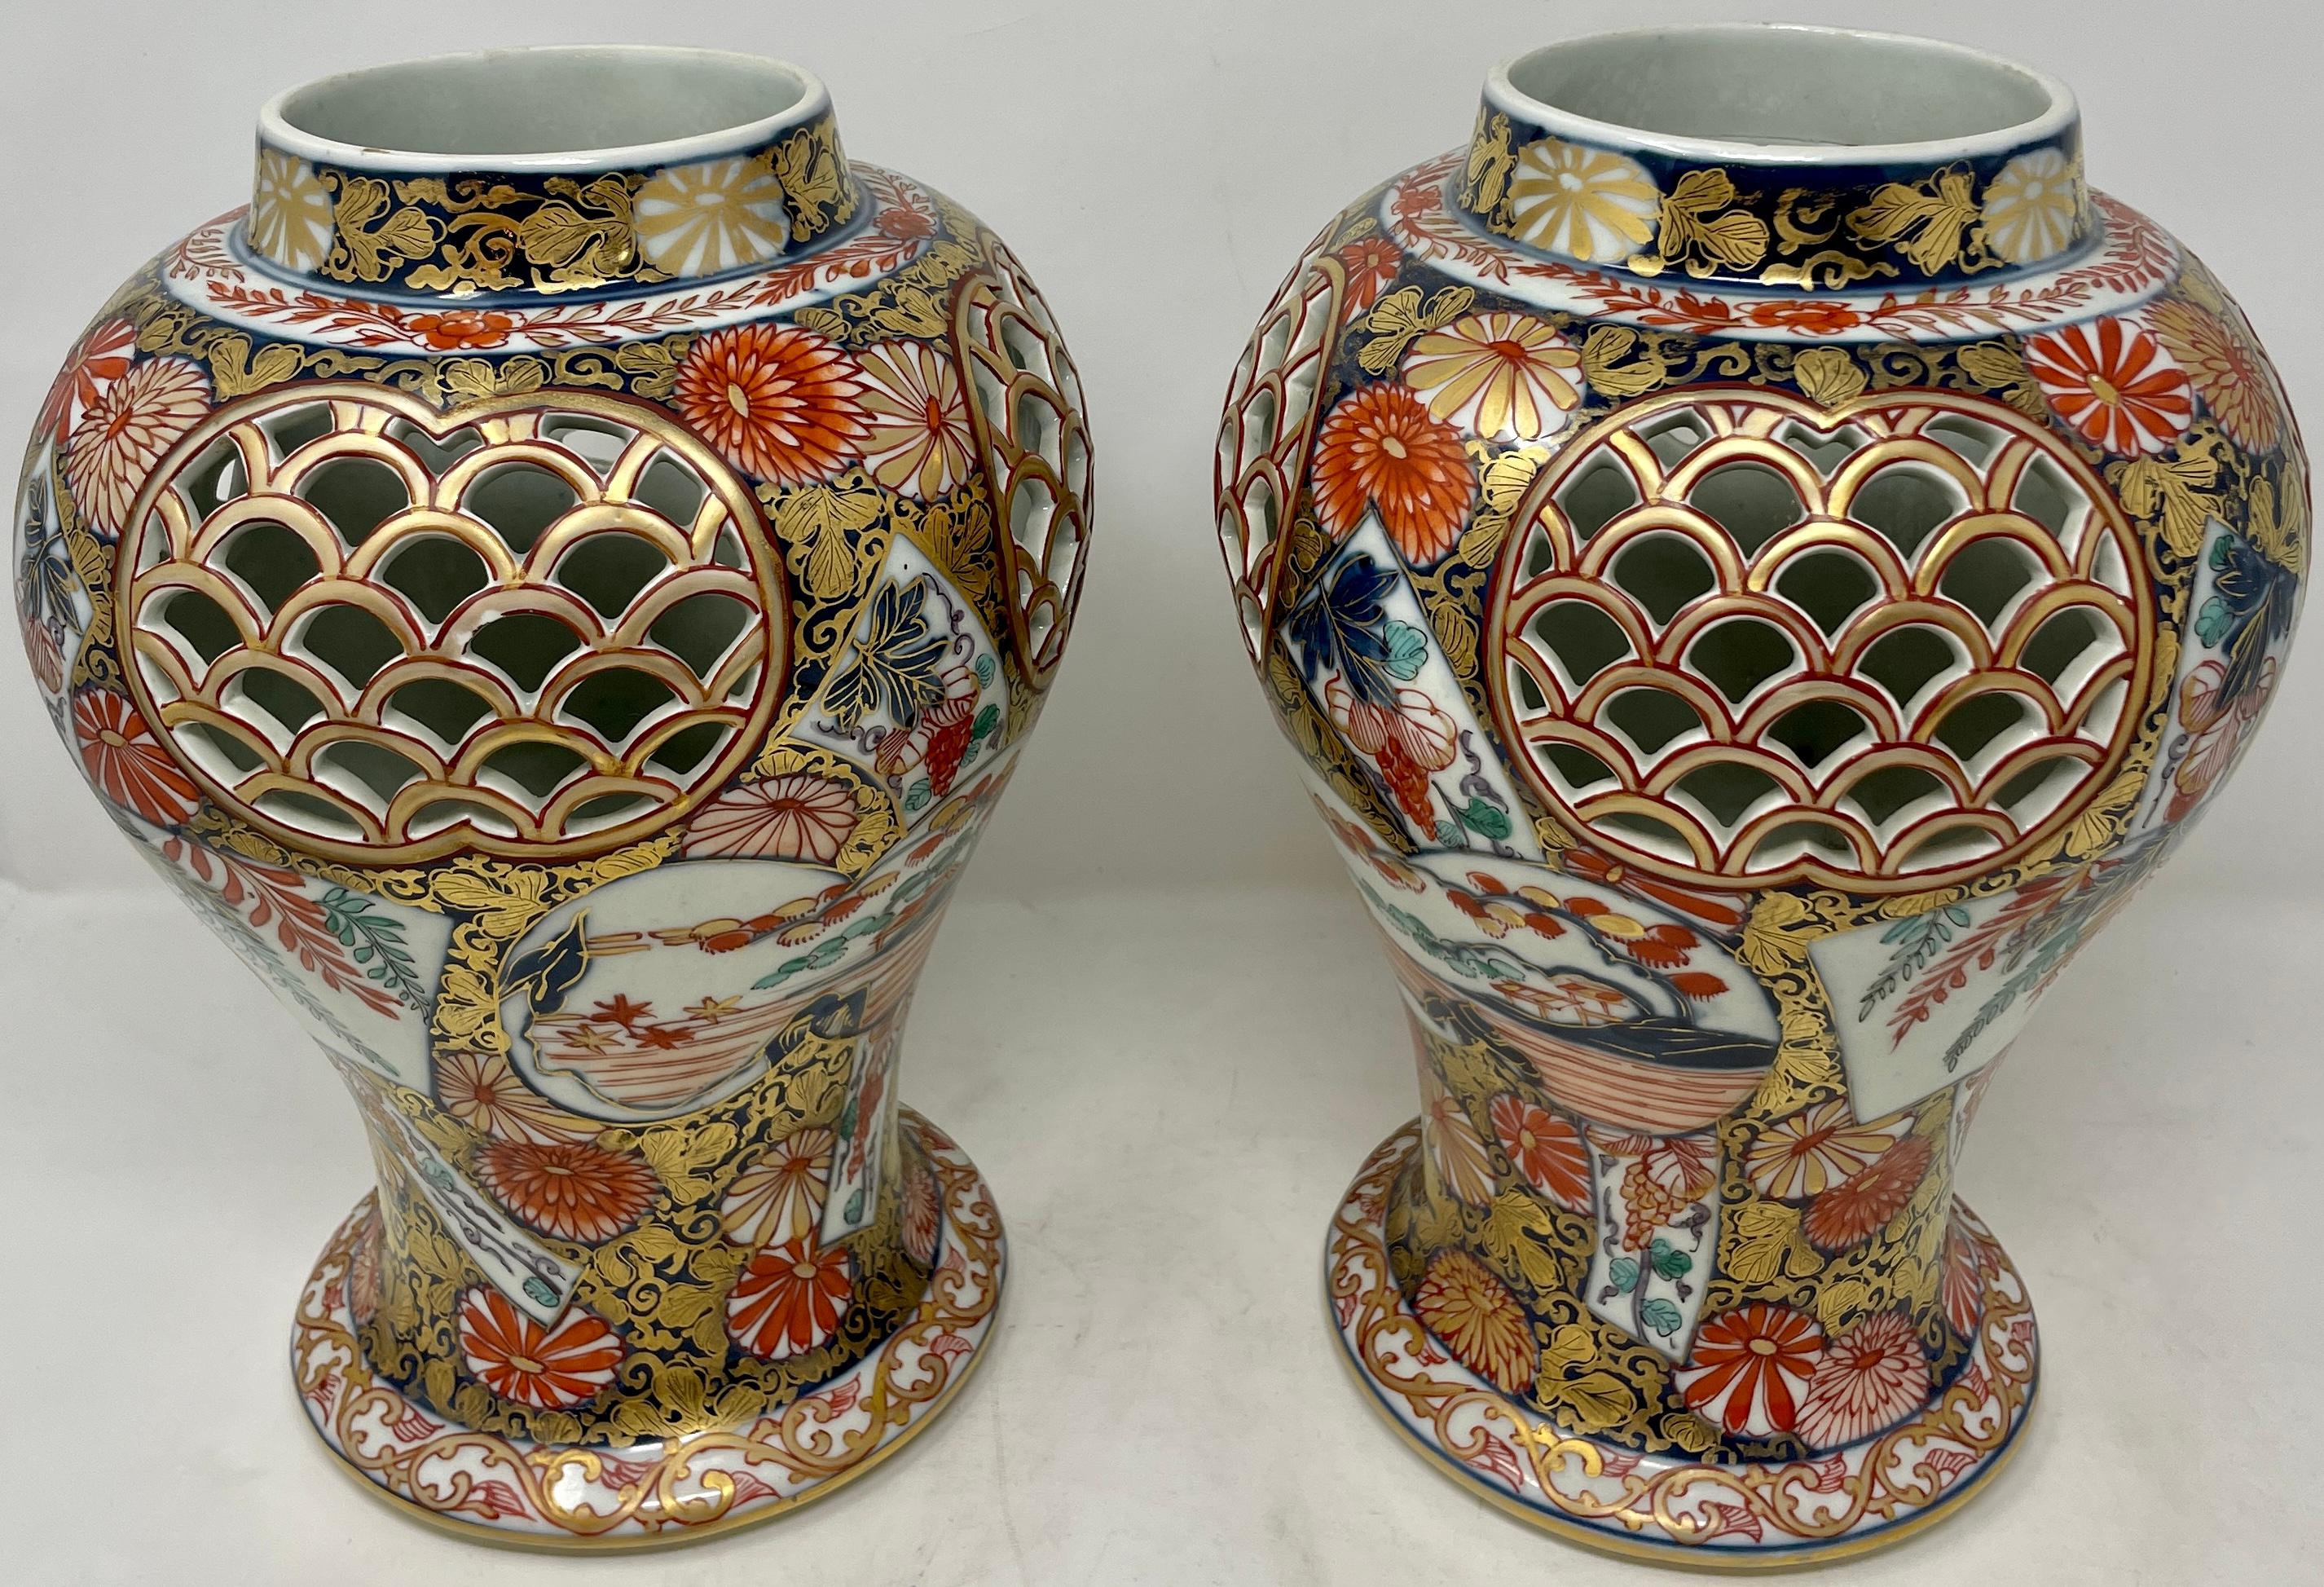 Pair very fine Antique Japanese Imari porcelain urns with reticulated pierce work, Circa 1880-1890.